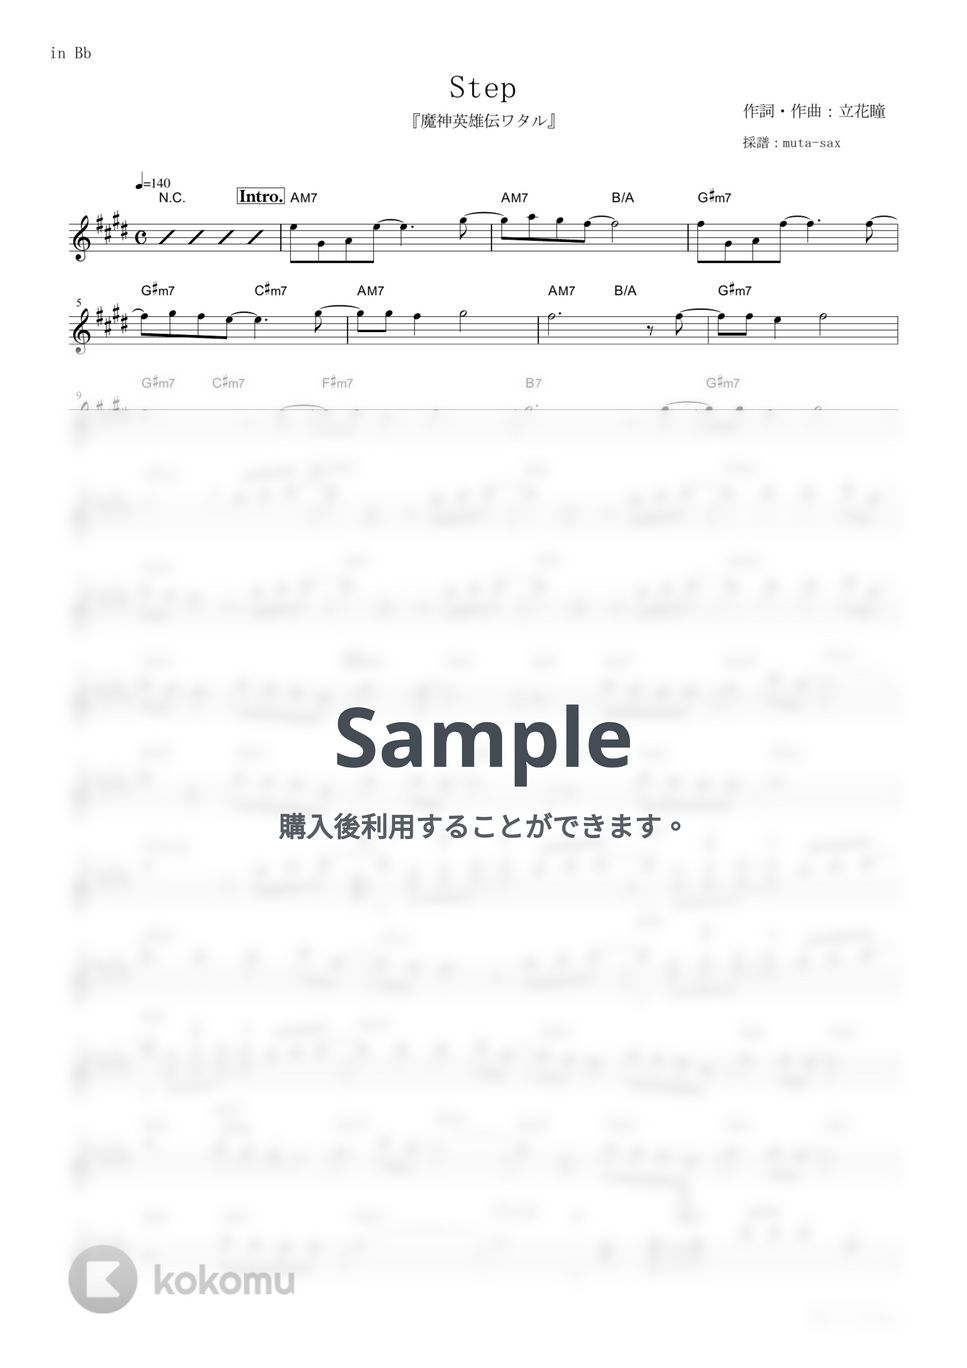 a・chi-a・chi - Step (『魔神英雄伝ワタル』 / in Bb) by muta-sax